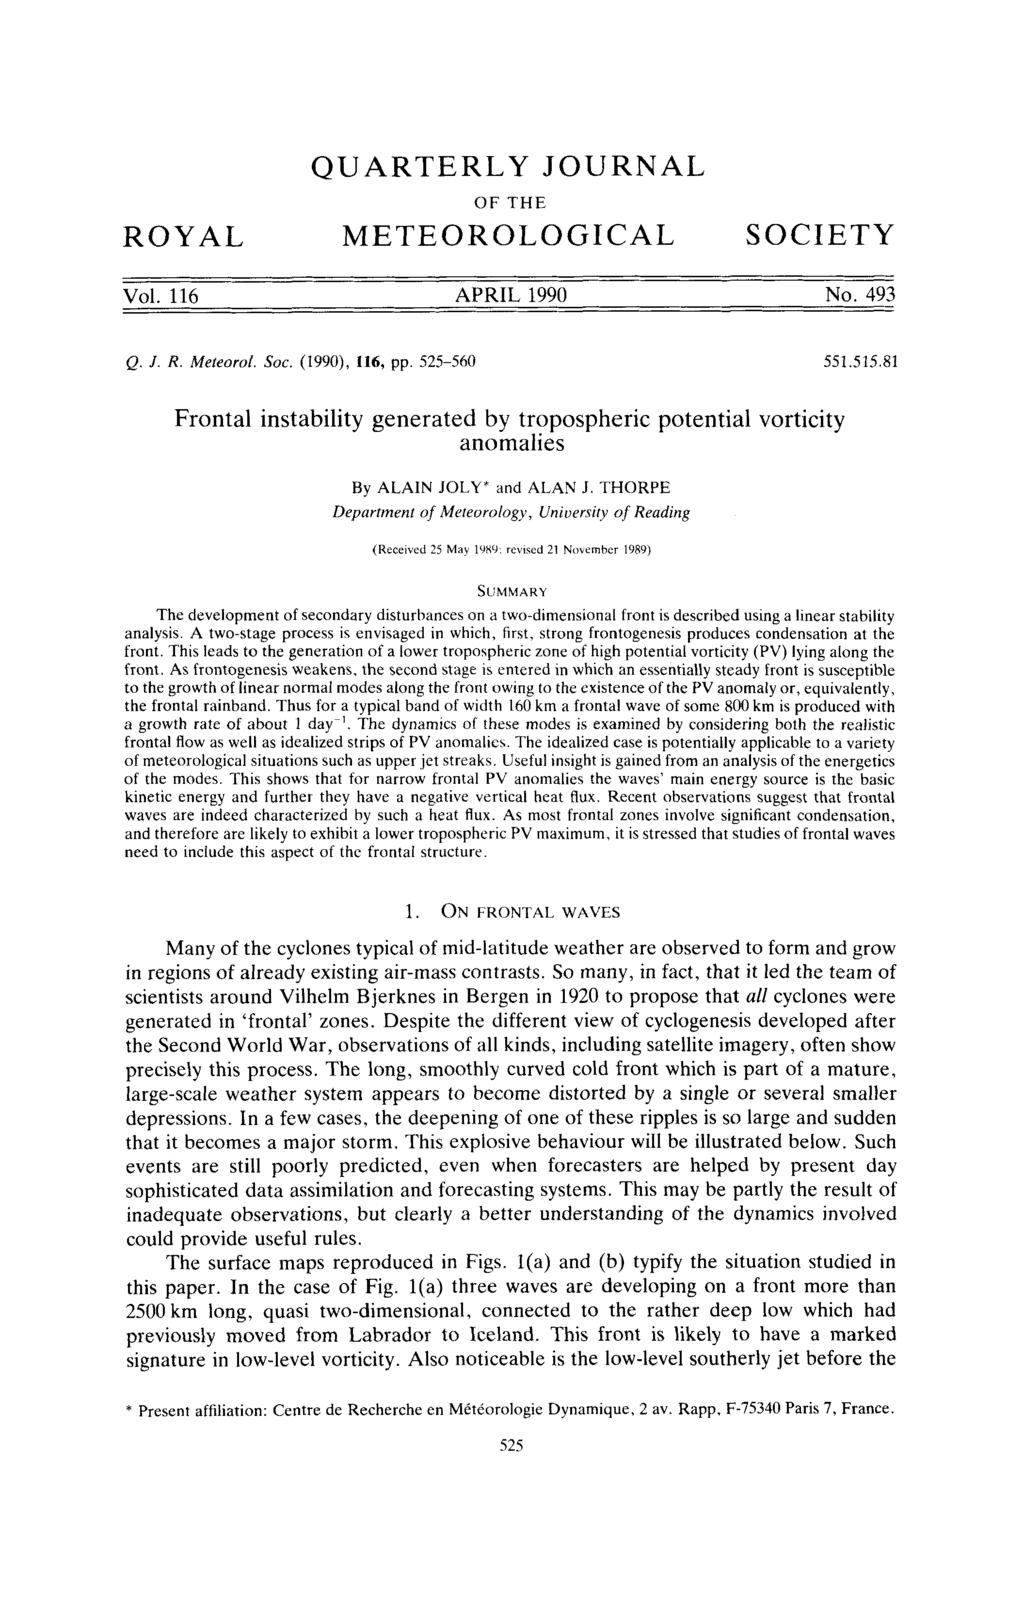 QUARTERLY JOURNAL OF THE ROYAL METEOROLOGICAL SOCIETY Vol. 116 APRIL 1990 No. 493 Q. J. R. Meteorol. Soc. (1990), 116, pp. 525-560 55 1.5 15.